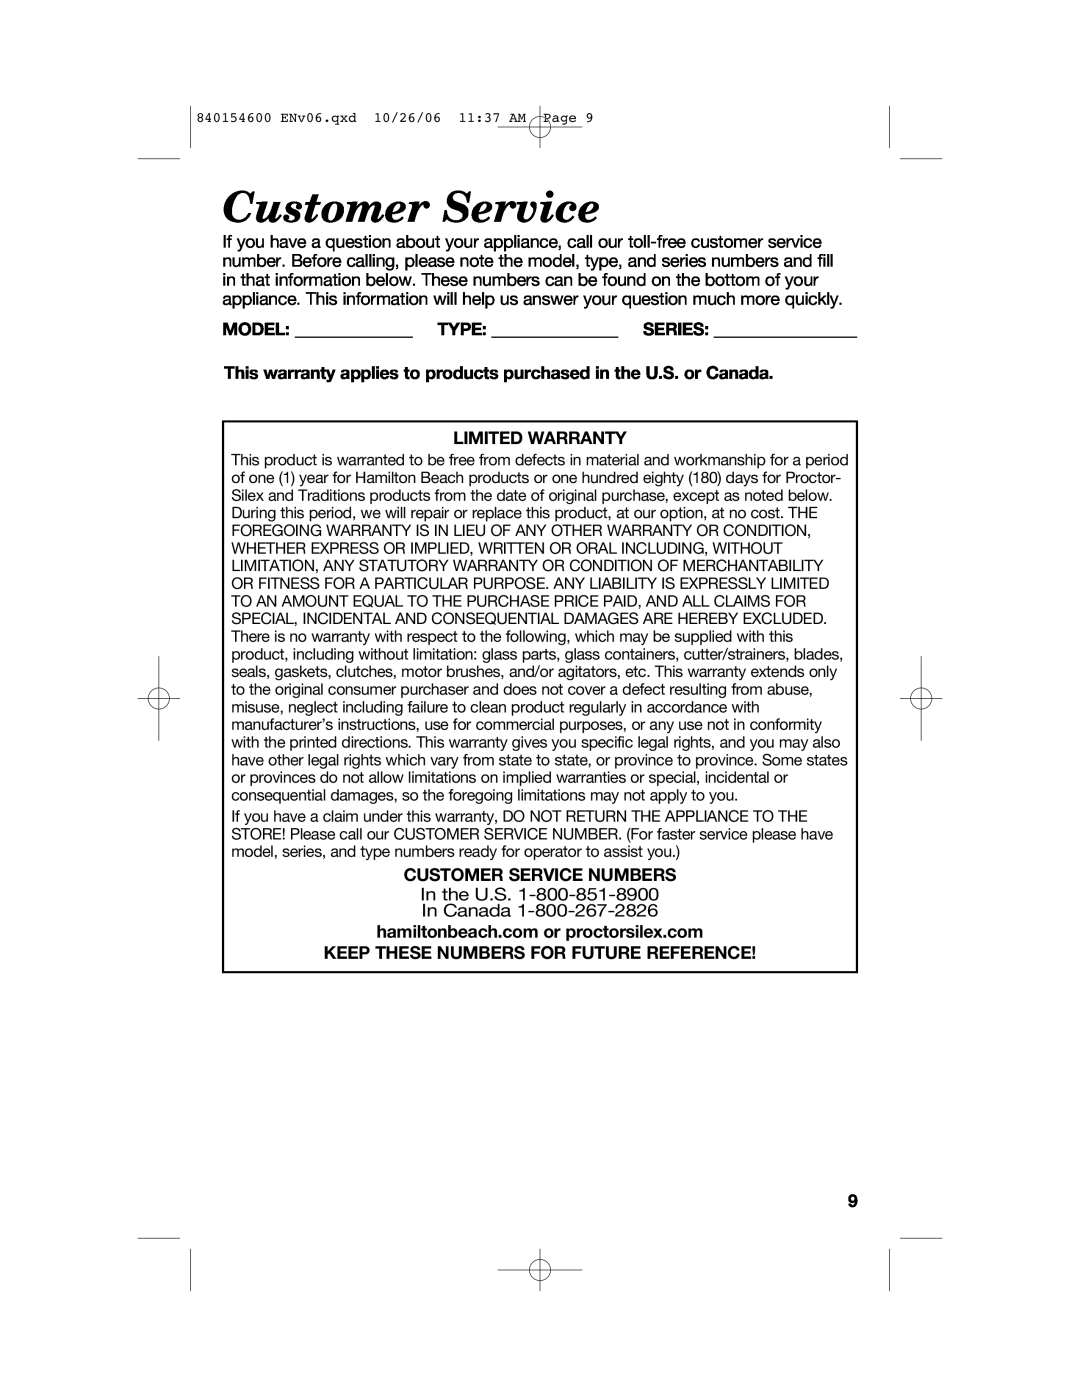 Hamilton Beach 840154600 manual Model Type Series, Limited Warranty, Customer Service Numbers 